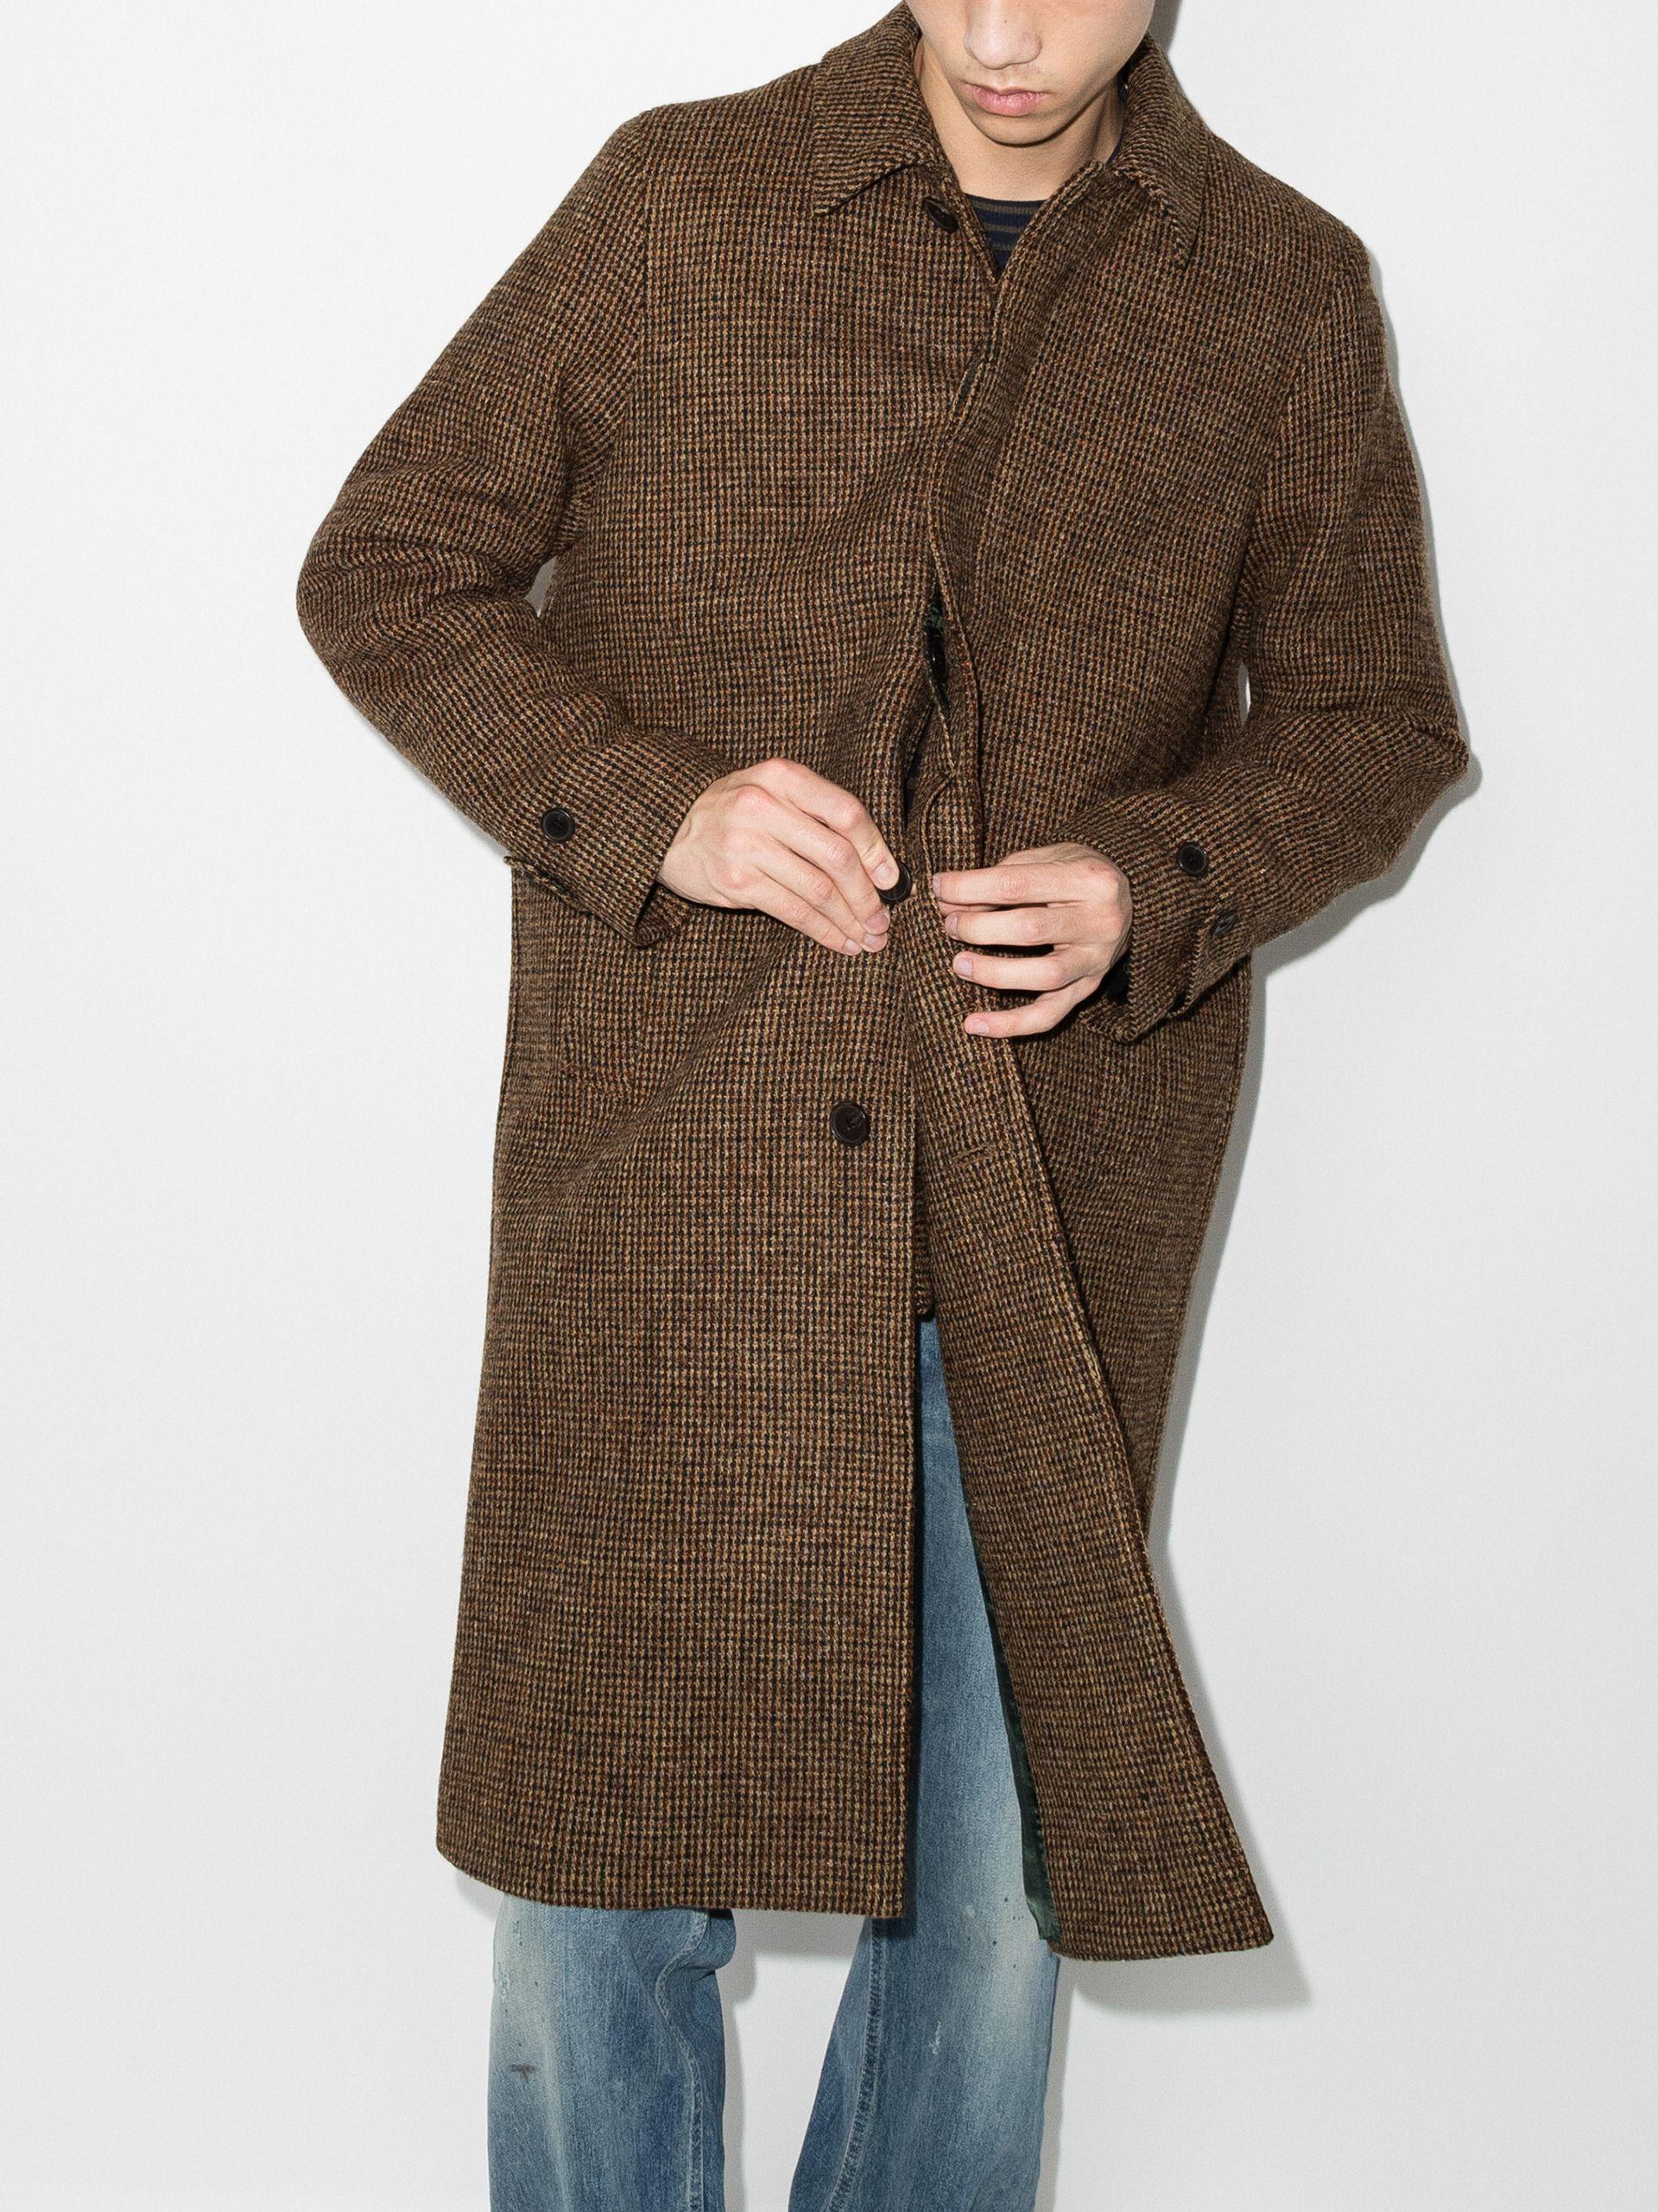 WOOD WOOD Harper Harris Tweed Overcoat in Brown for Men | Lyst UK